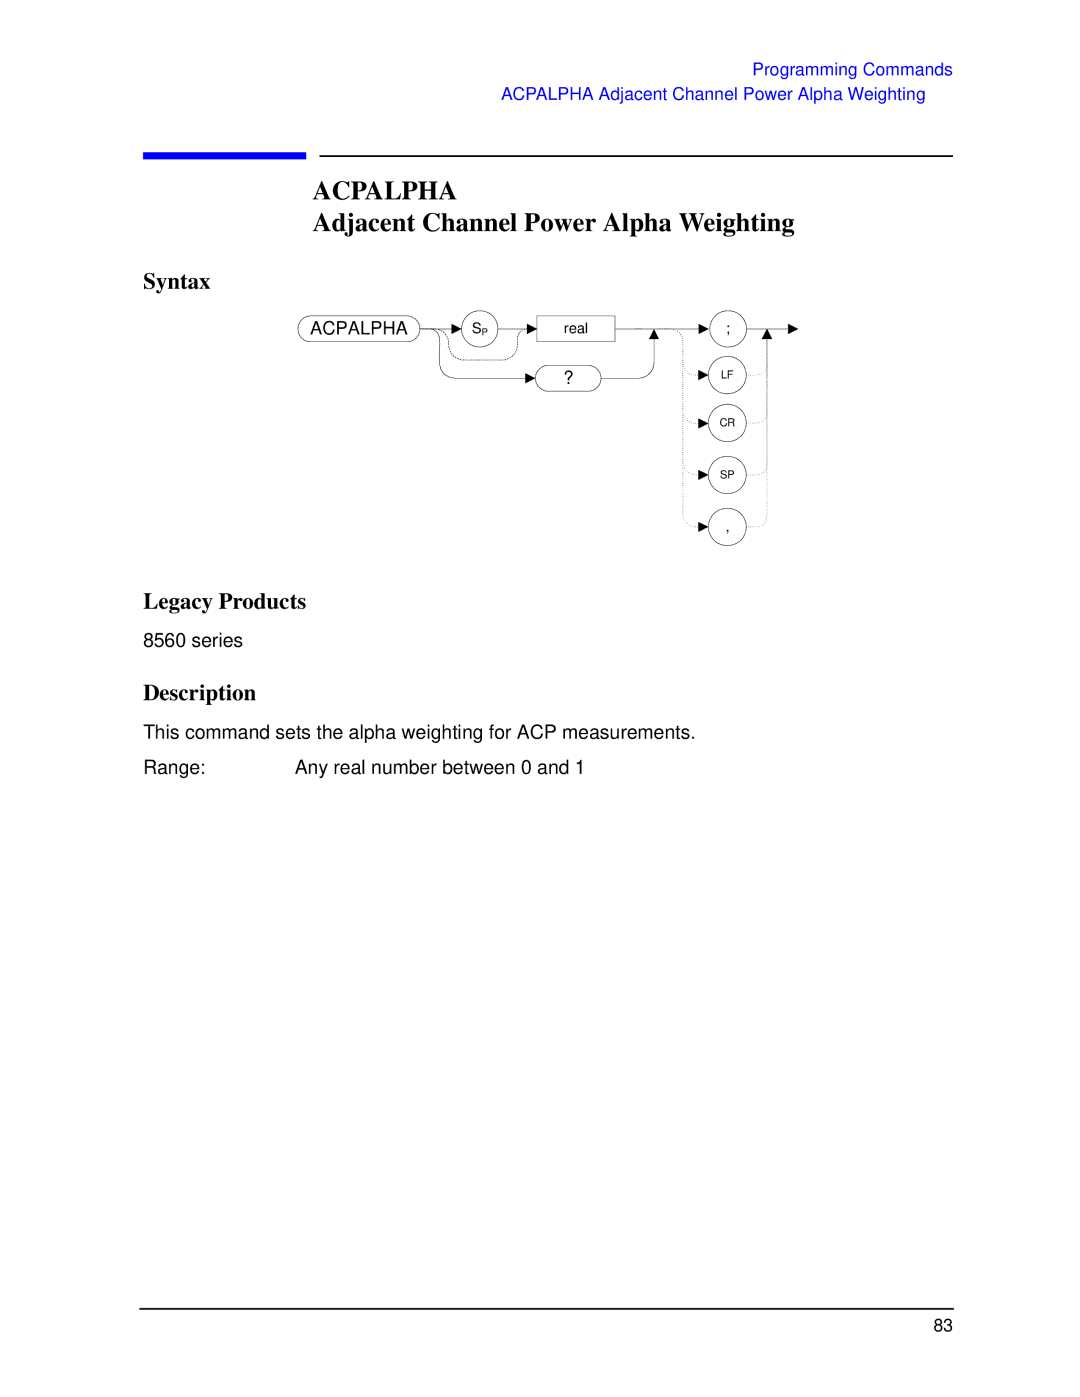 Agilent Technologies N9030a manual Acpalpha, Adjacent Channel Power Alpha Weighting 